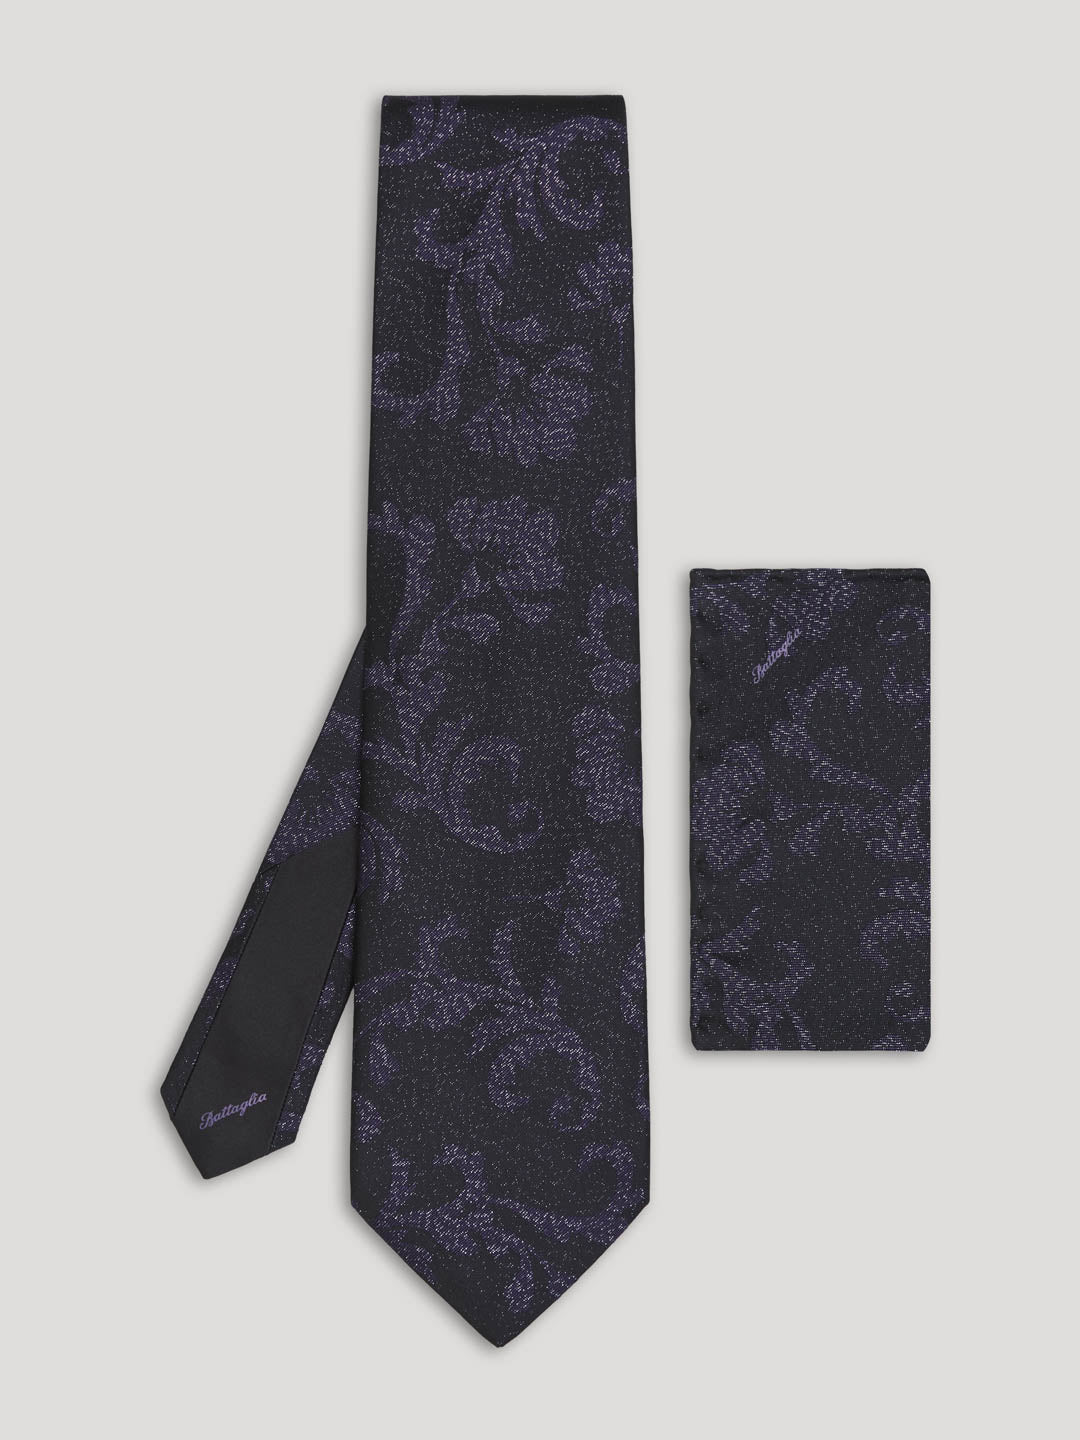 Black tie with floral design and handkerchief. 